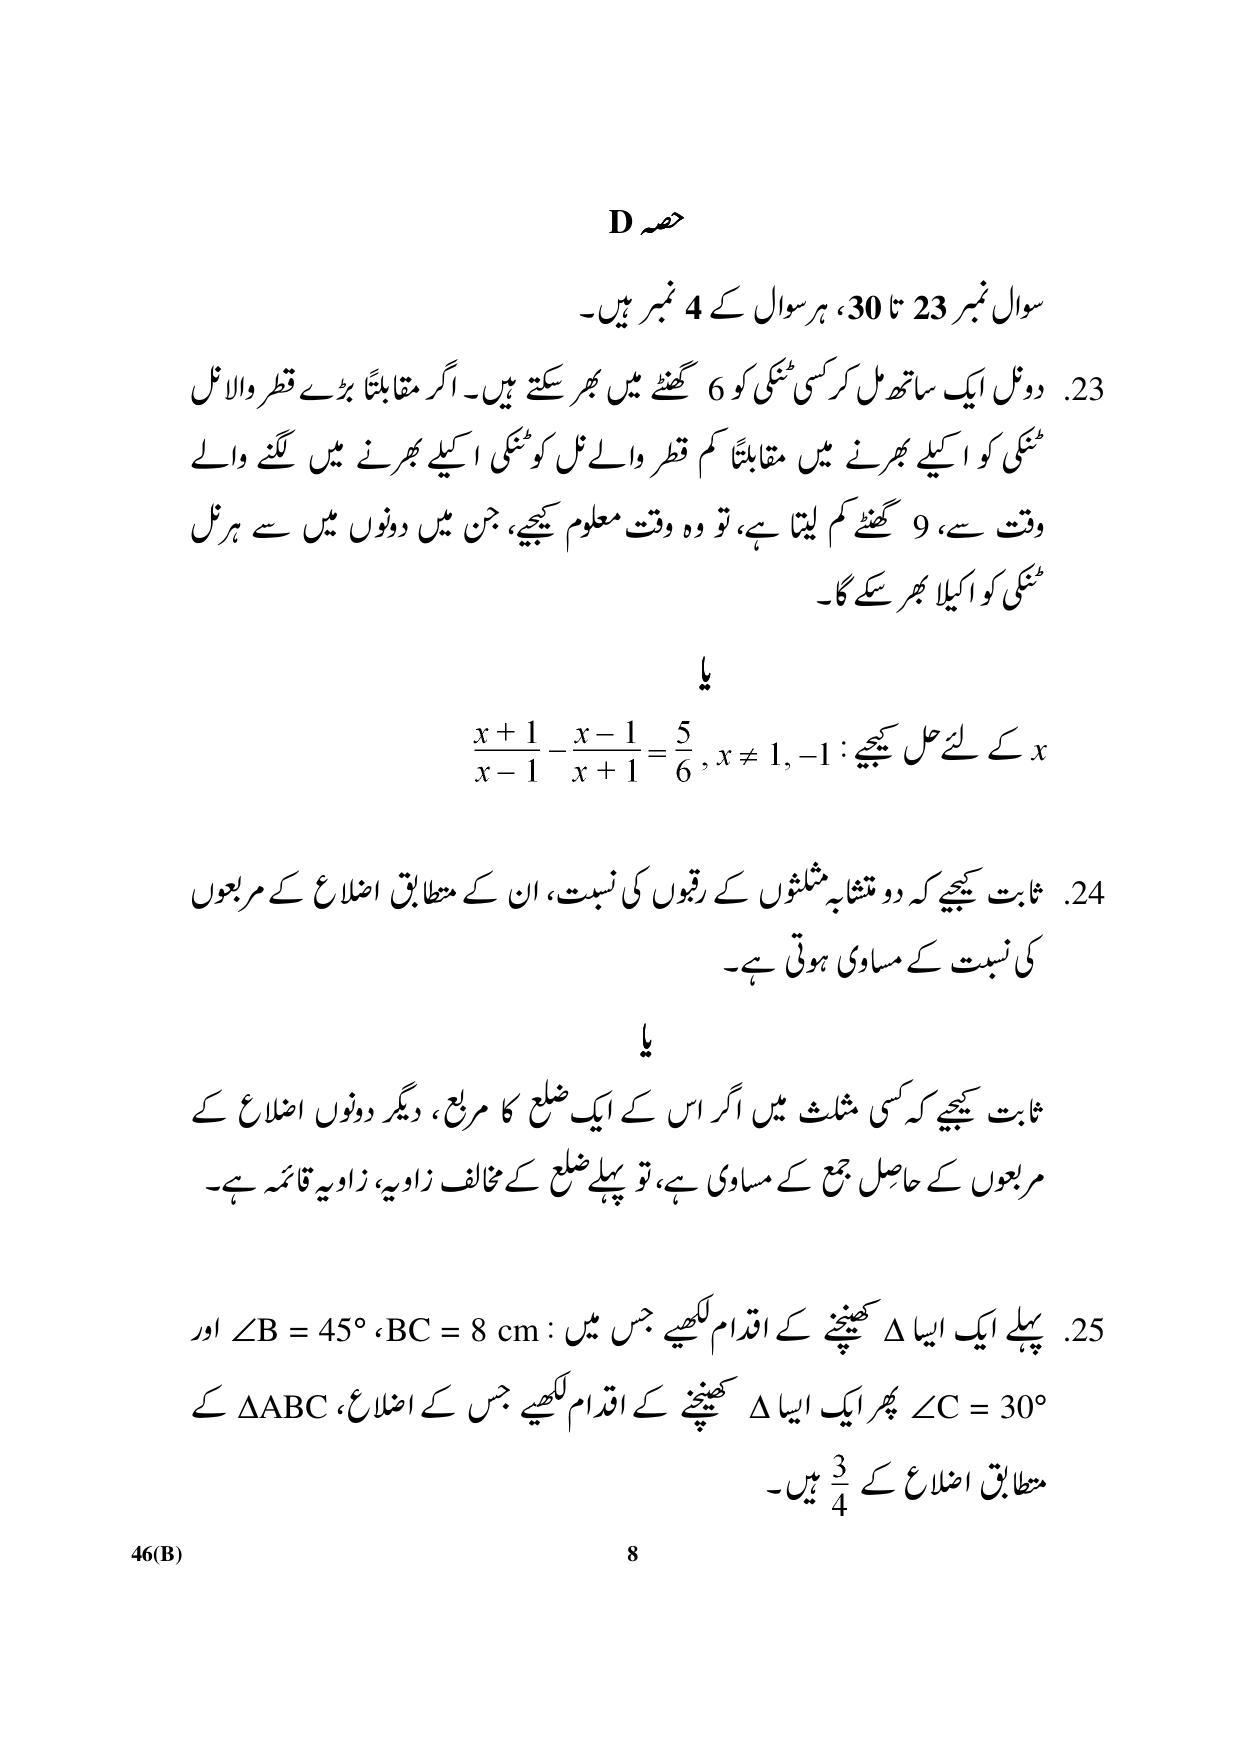 CBSE Class 10 46(B) Maths (For Blind) Urdu Version 2018 Question Paper - Page 8